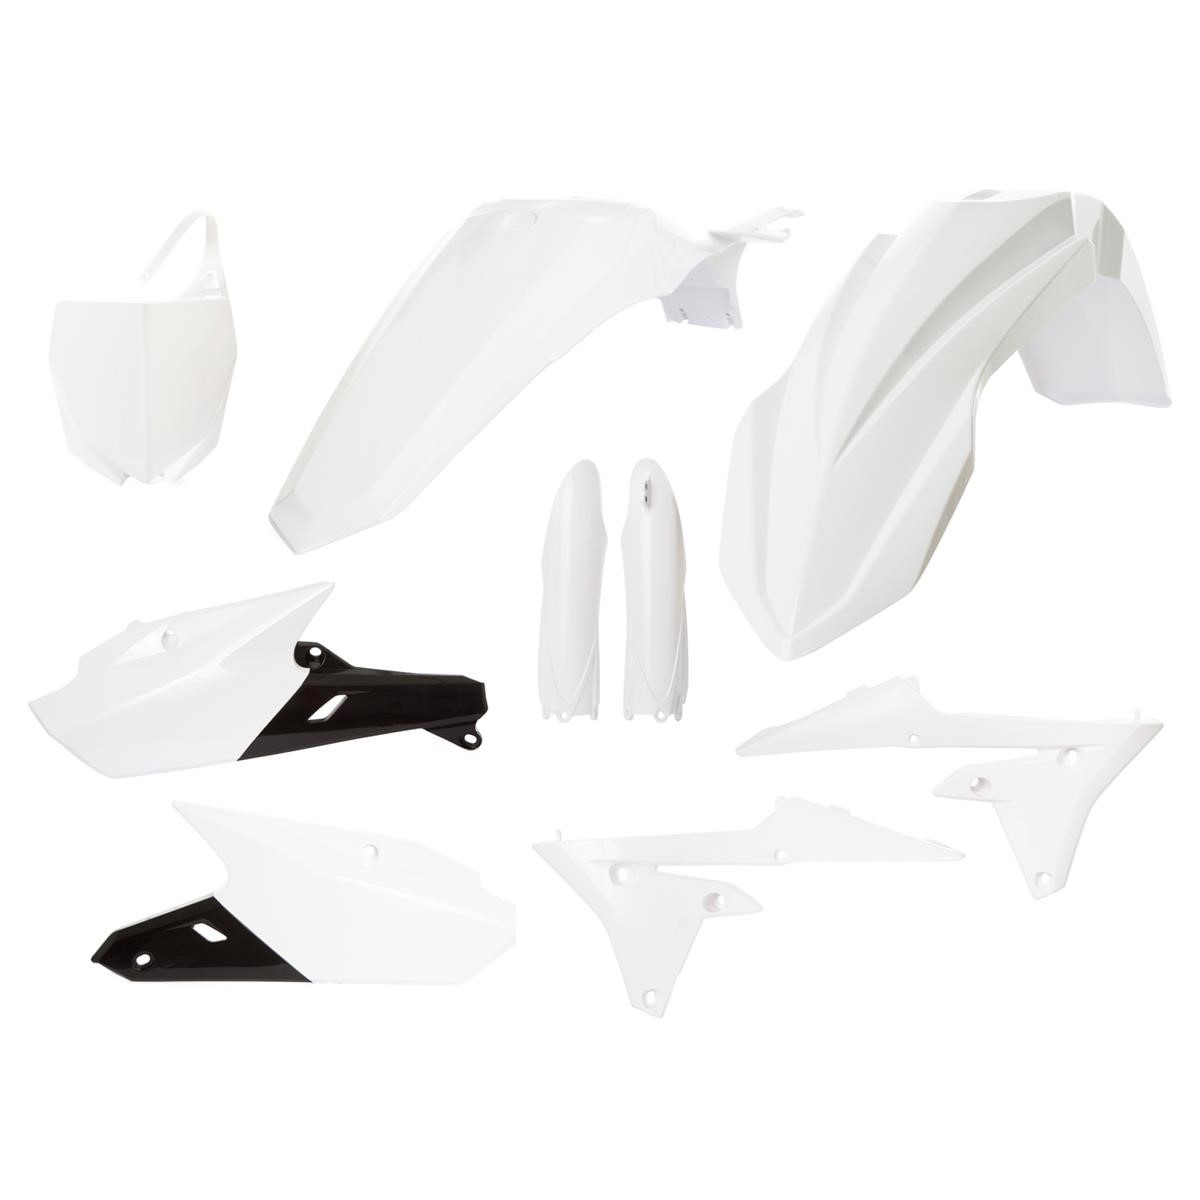 Acerbis Plastic Kit Full-Kit Yamaha YZF 250/450 14-17, Replica White